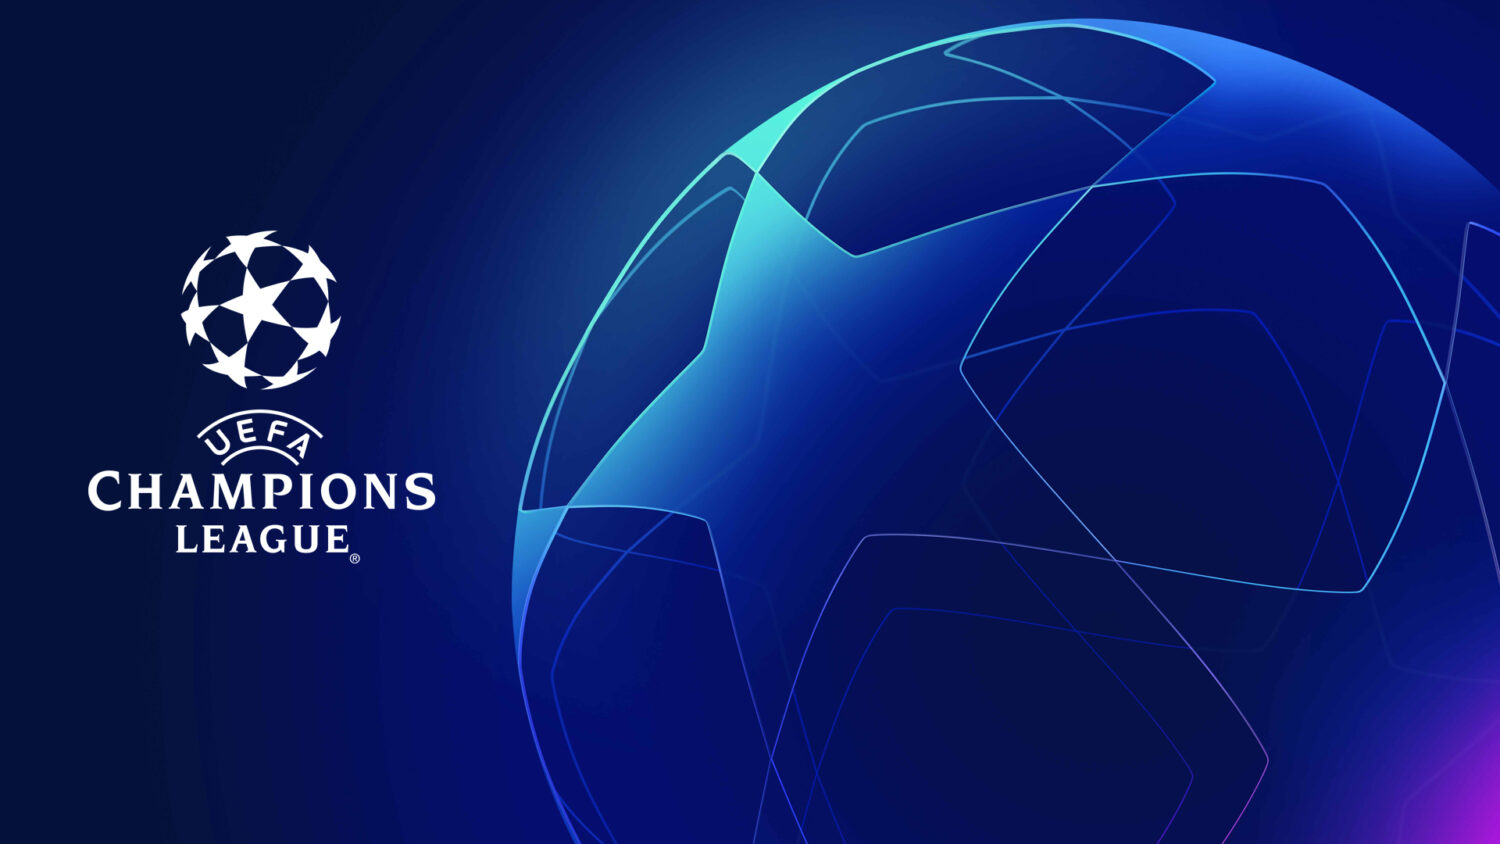 UEFA Champions League – KeyVisual Starball